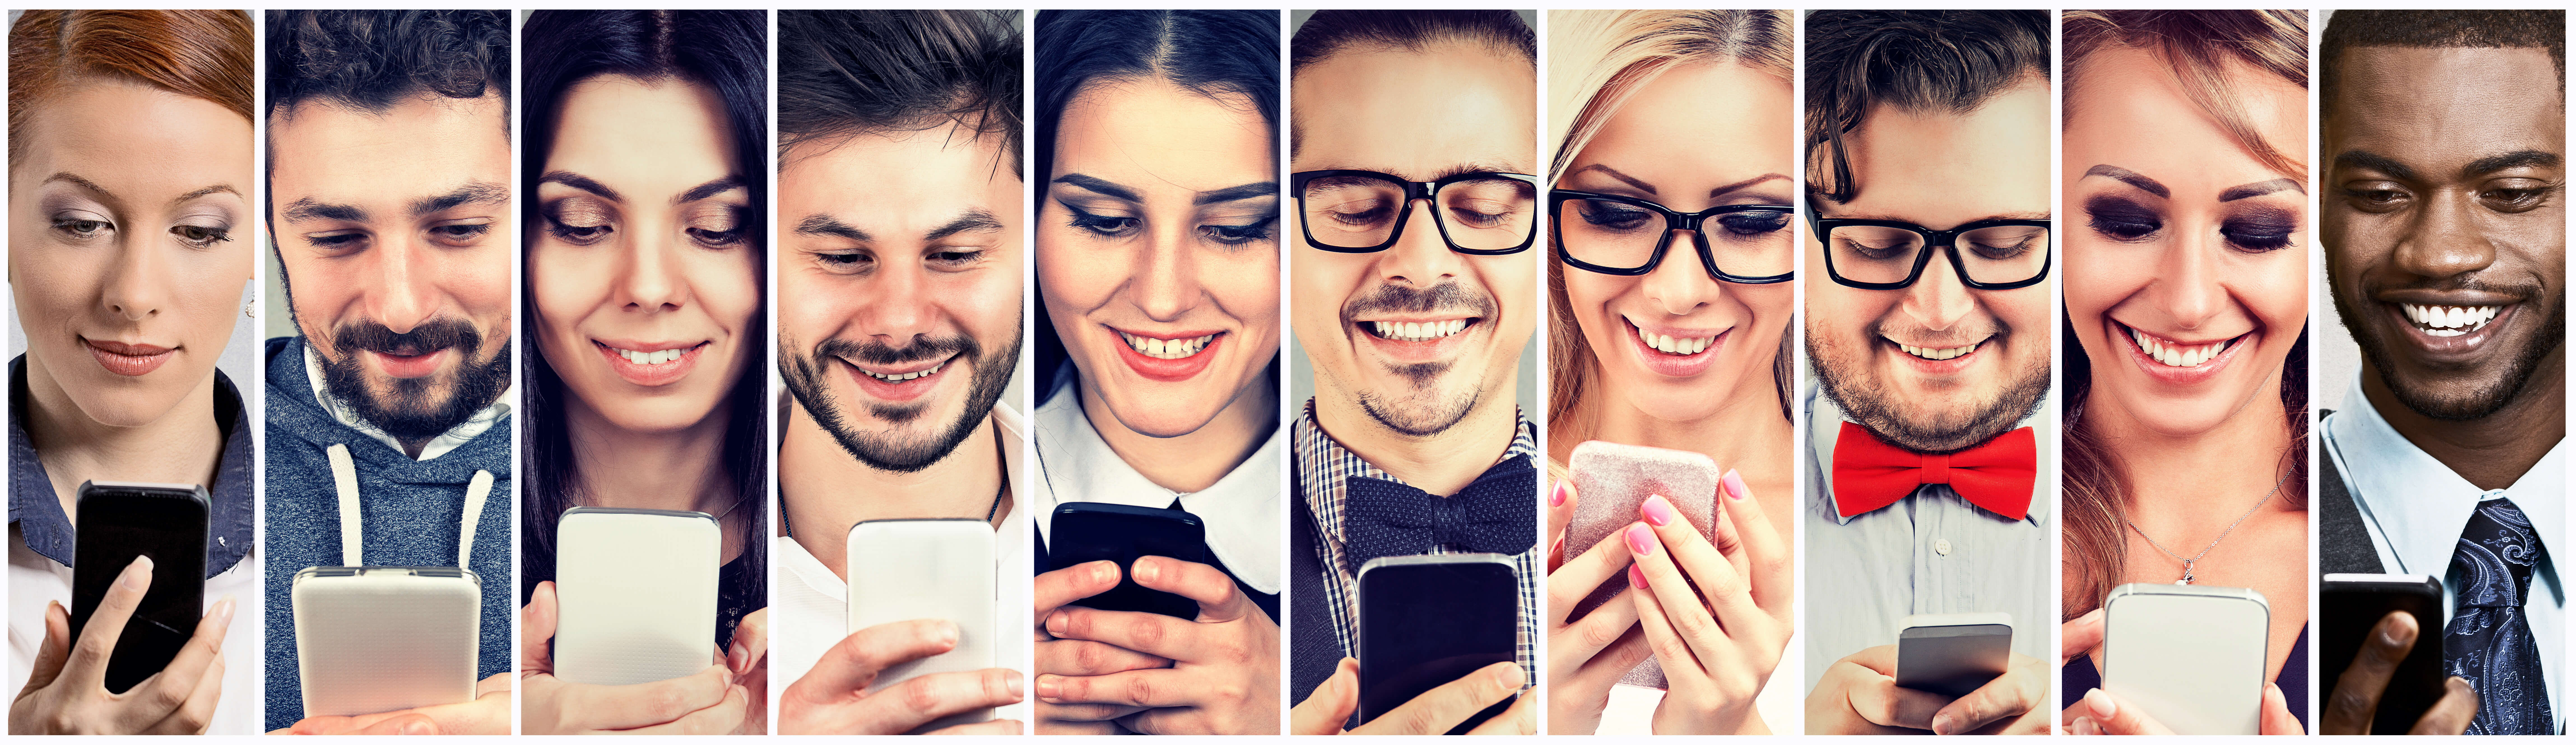 Customer Satisfaction | SMS Marketing